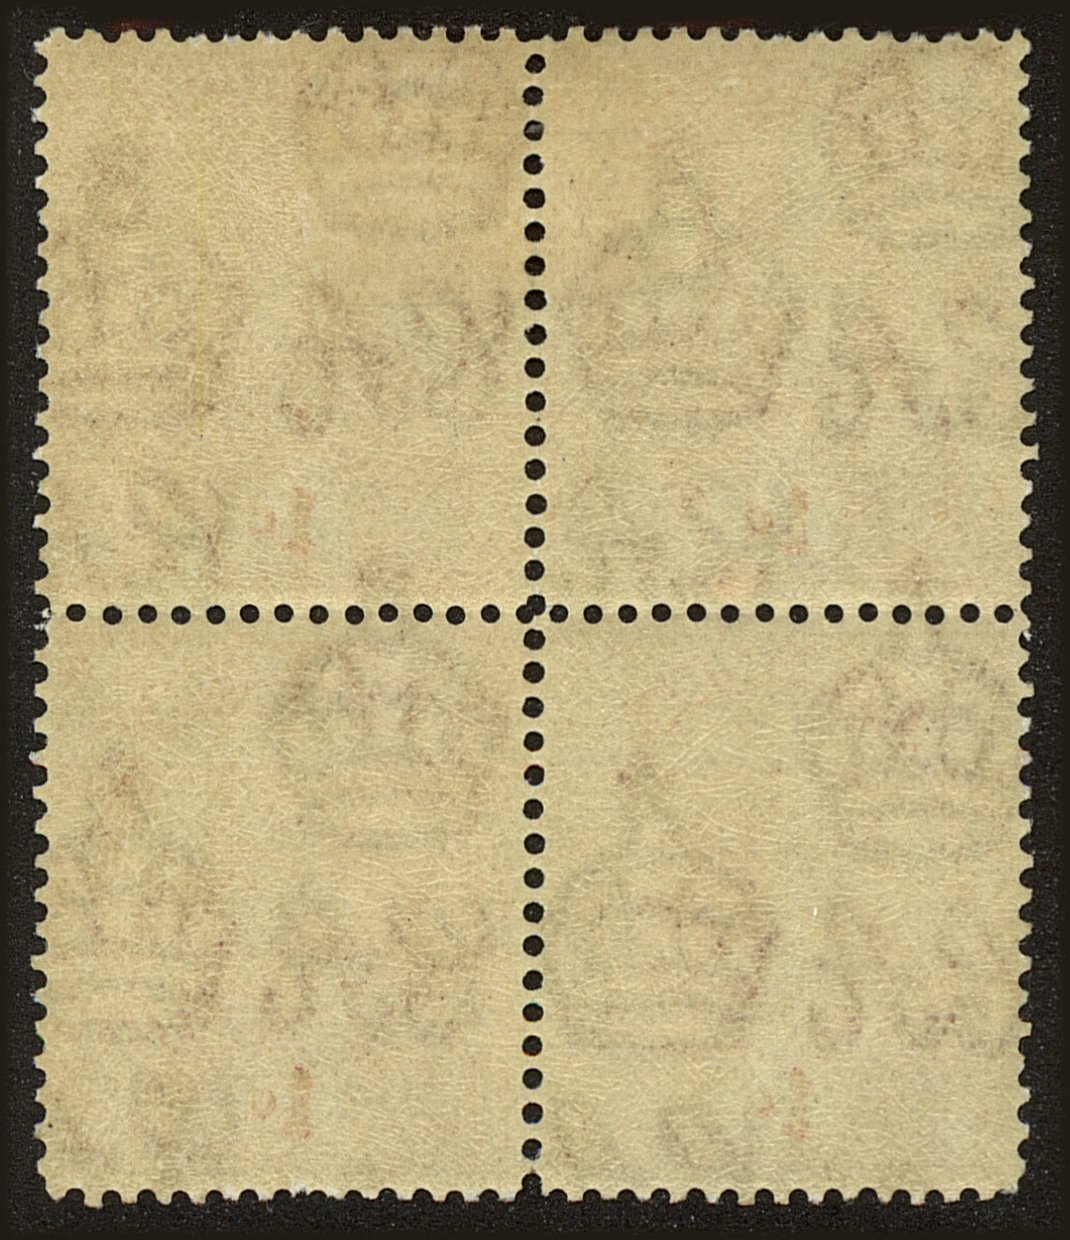 Back view of Bermuda Scott #83 stamp